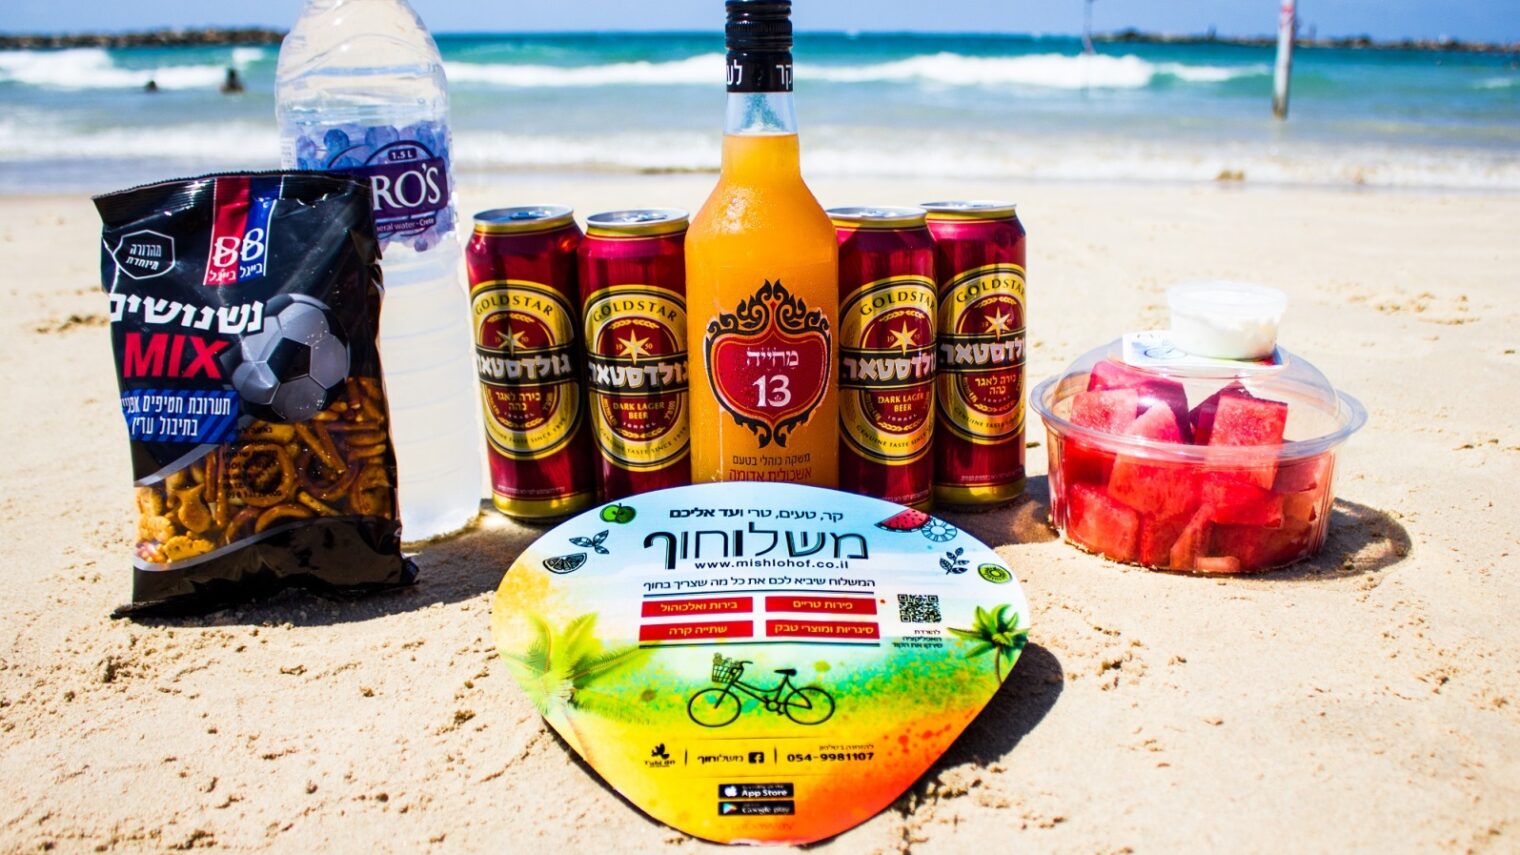 Mishlohof delivers directly to the beaches of Tel Aviv. Photo by Liran Yatom/ Mishlohof